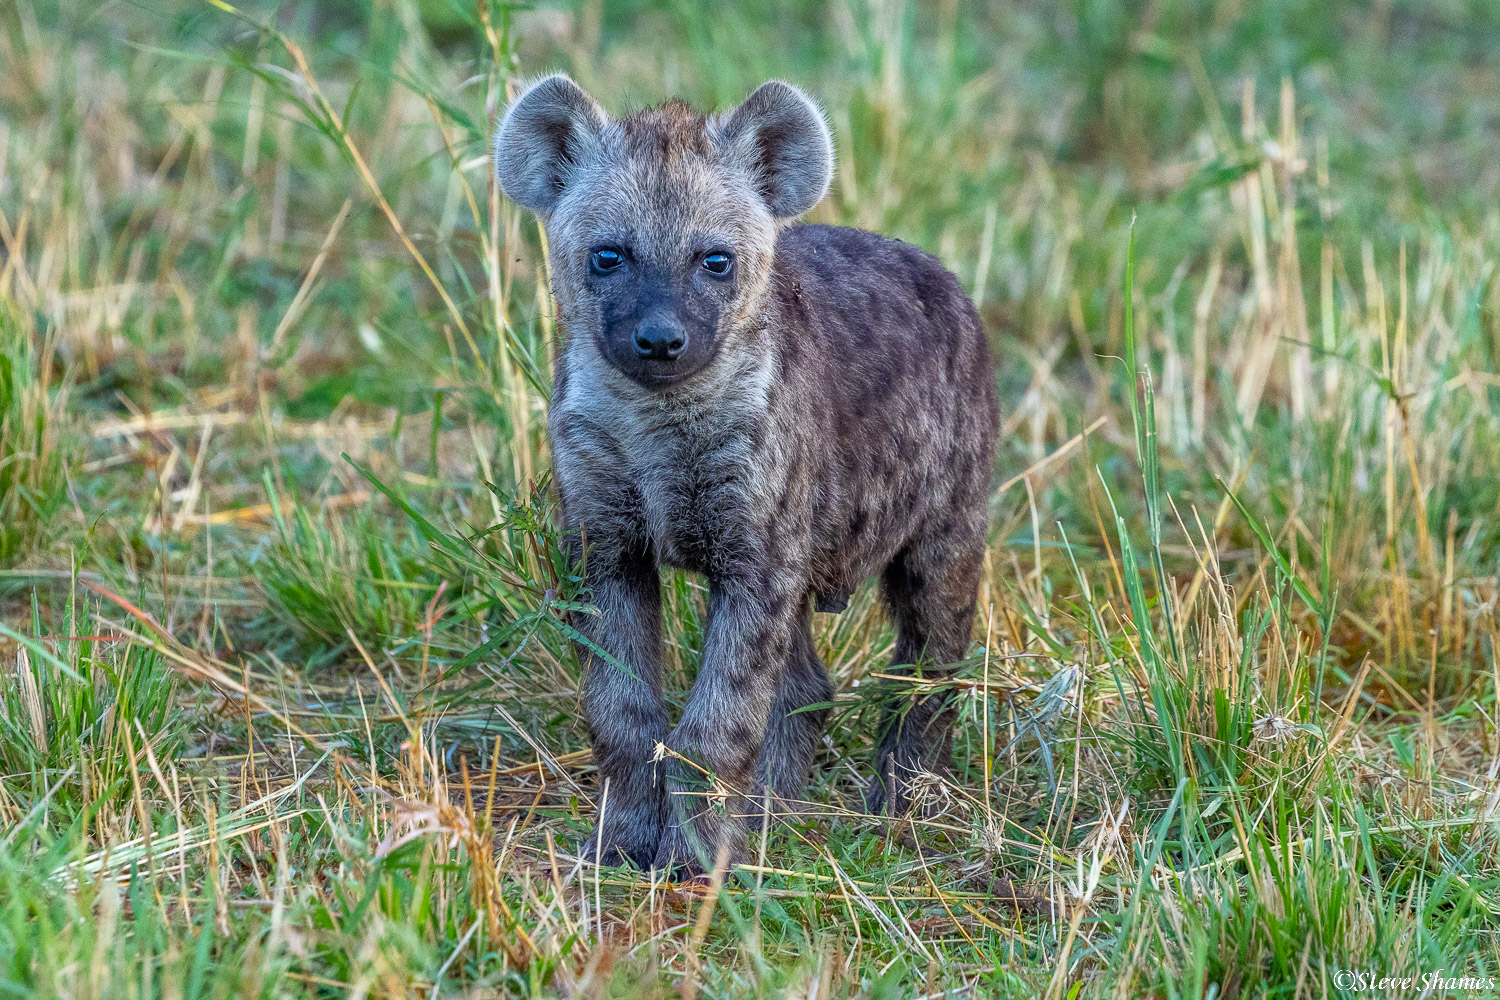 A little hyena cub. Their coats will lighten up when they get older.